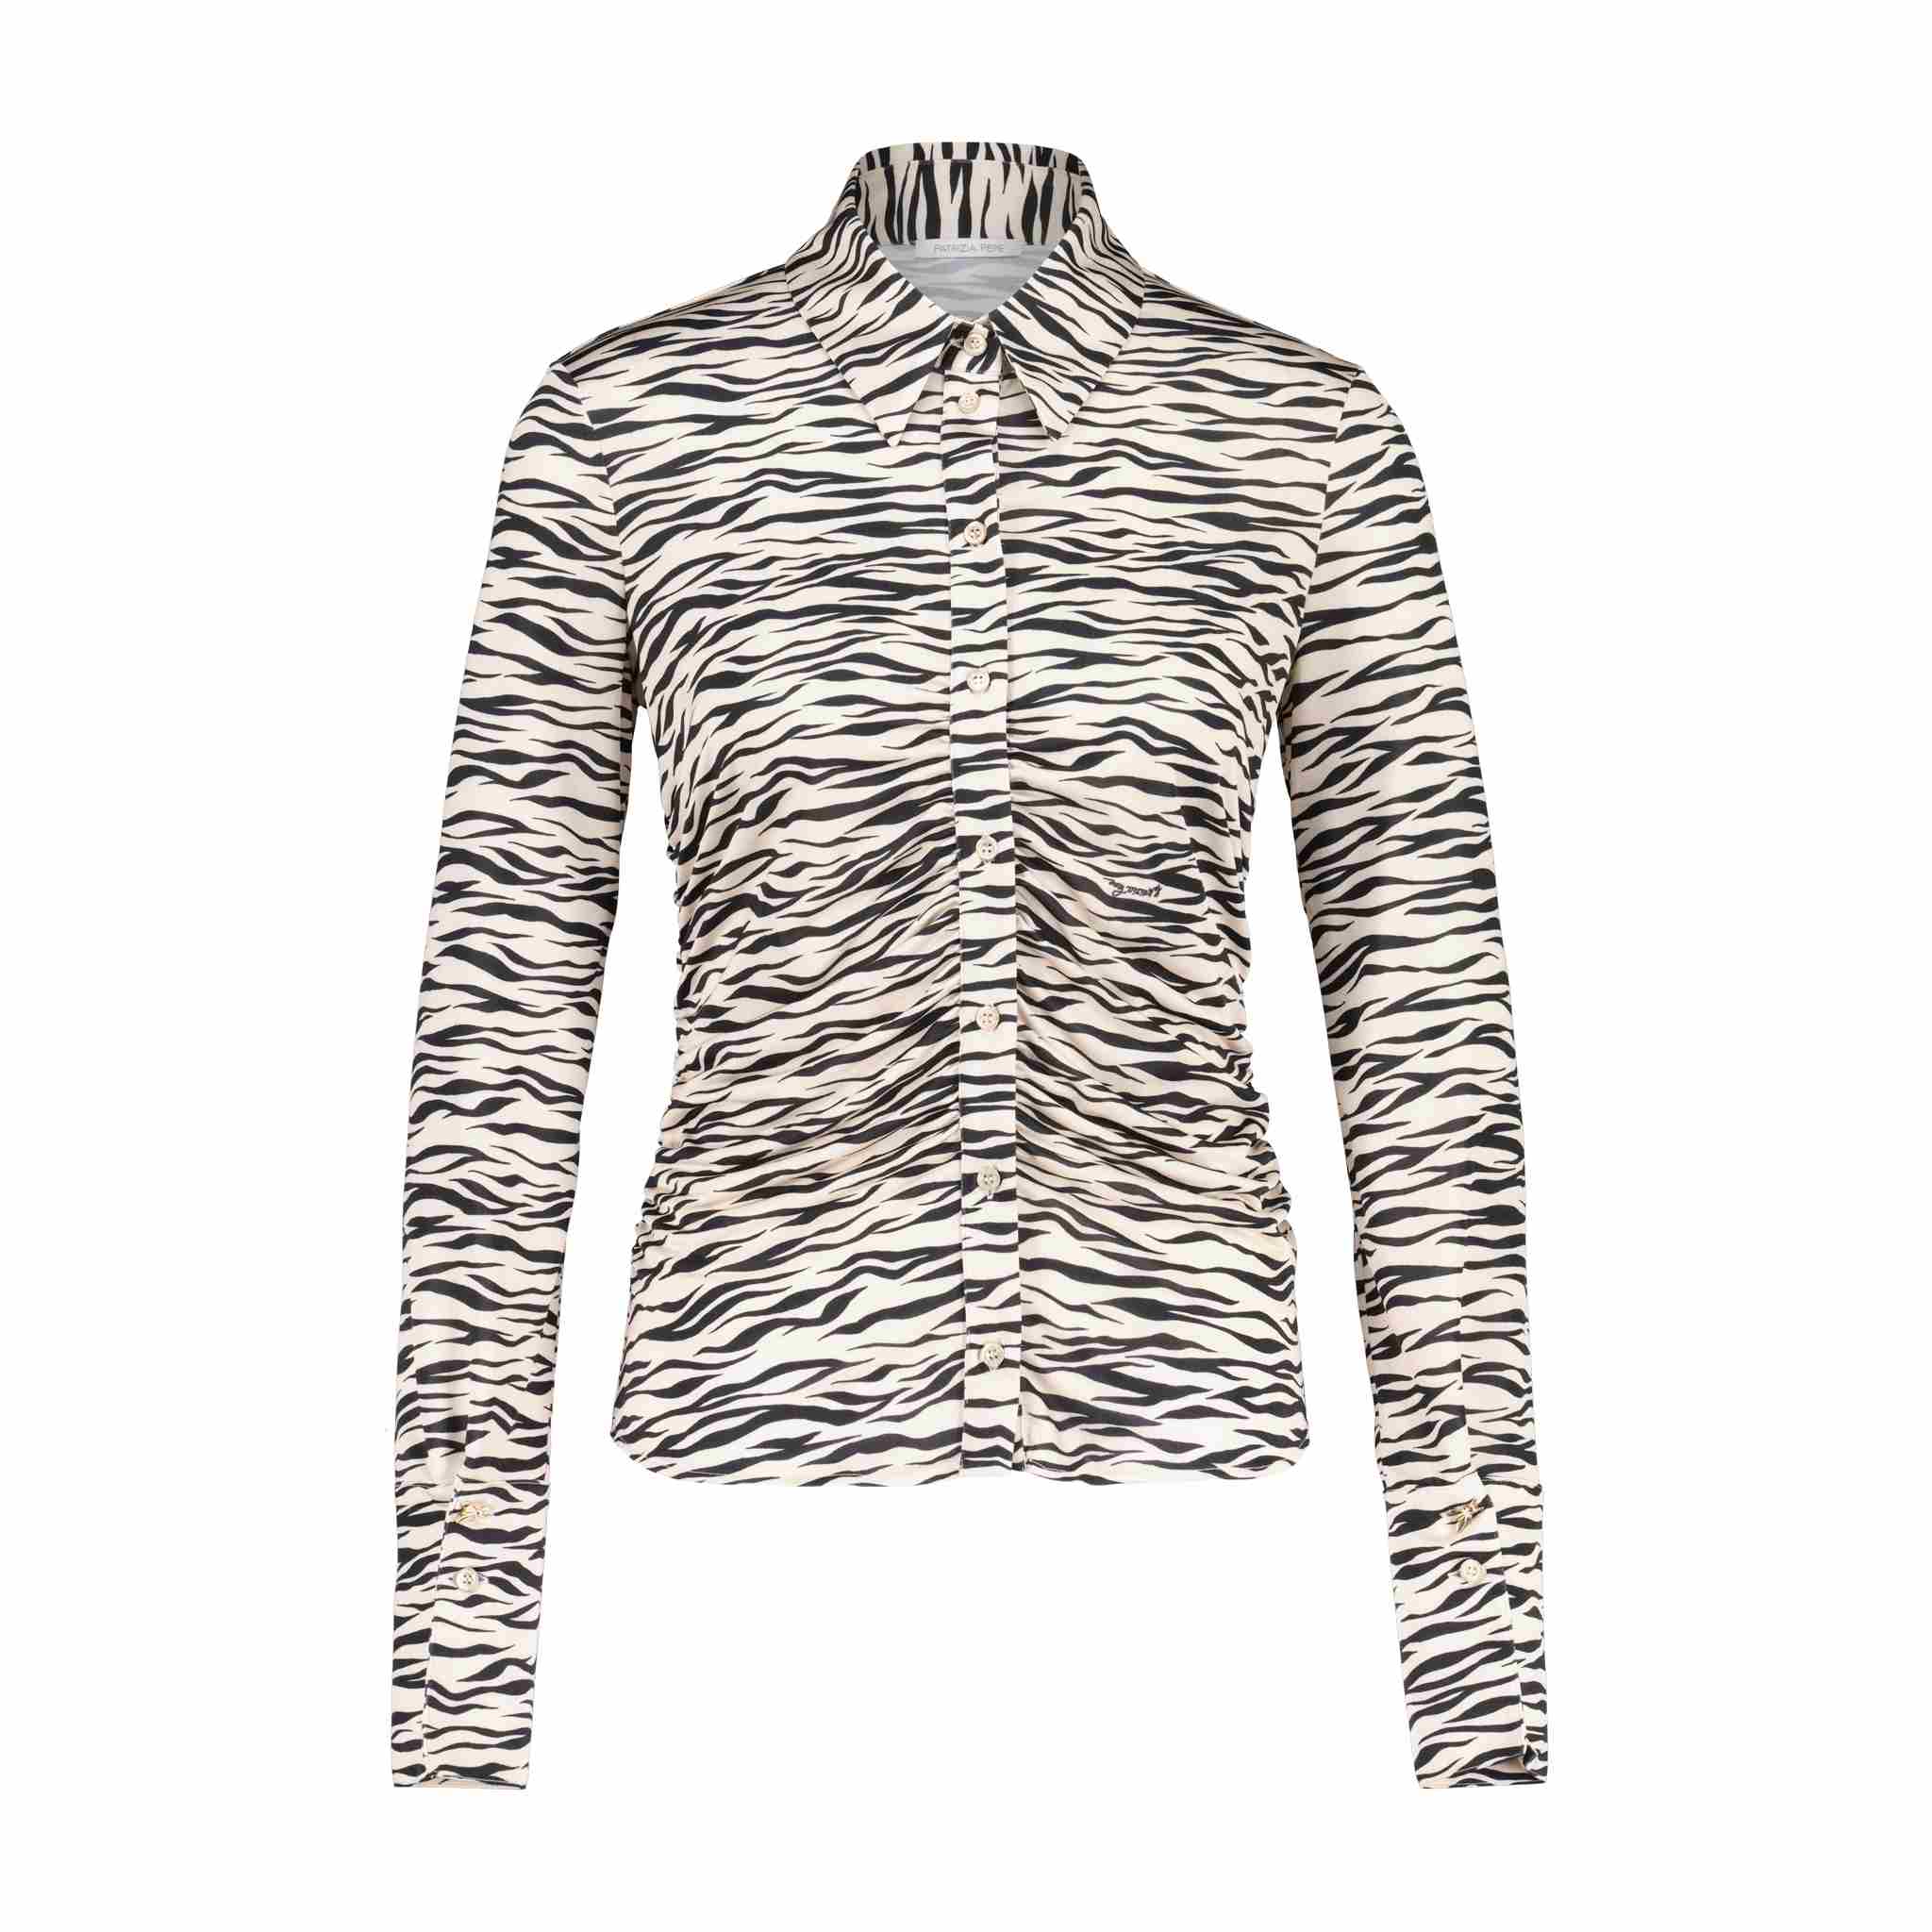 Bluse Camicia im Zebra-Look